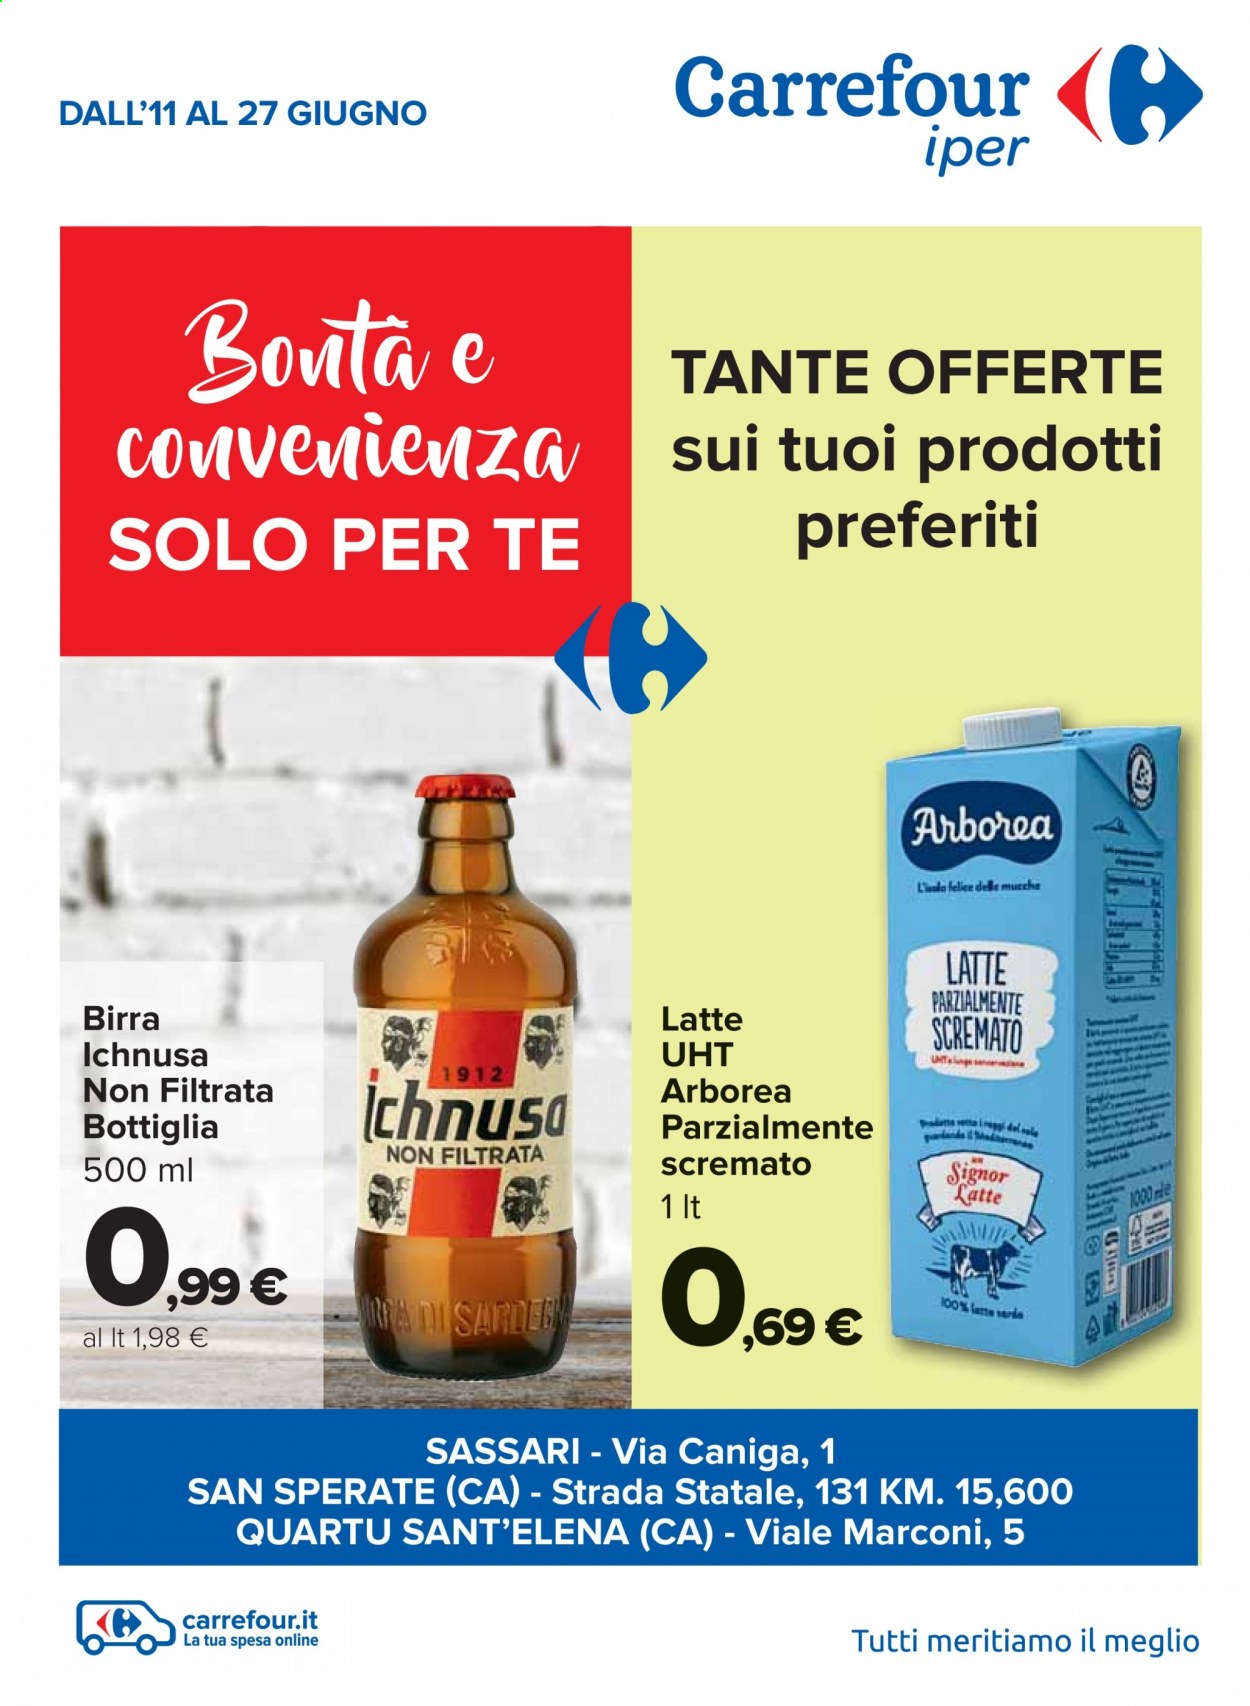 thumbnail - Volantino Carrefour - 11/6/2021 - 27/6/2021 - Prodotti in offerta - birra, Ichnusa, sarde, Arborea, latte. Pagina 1.